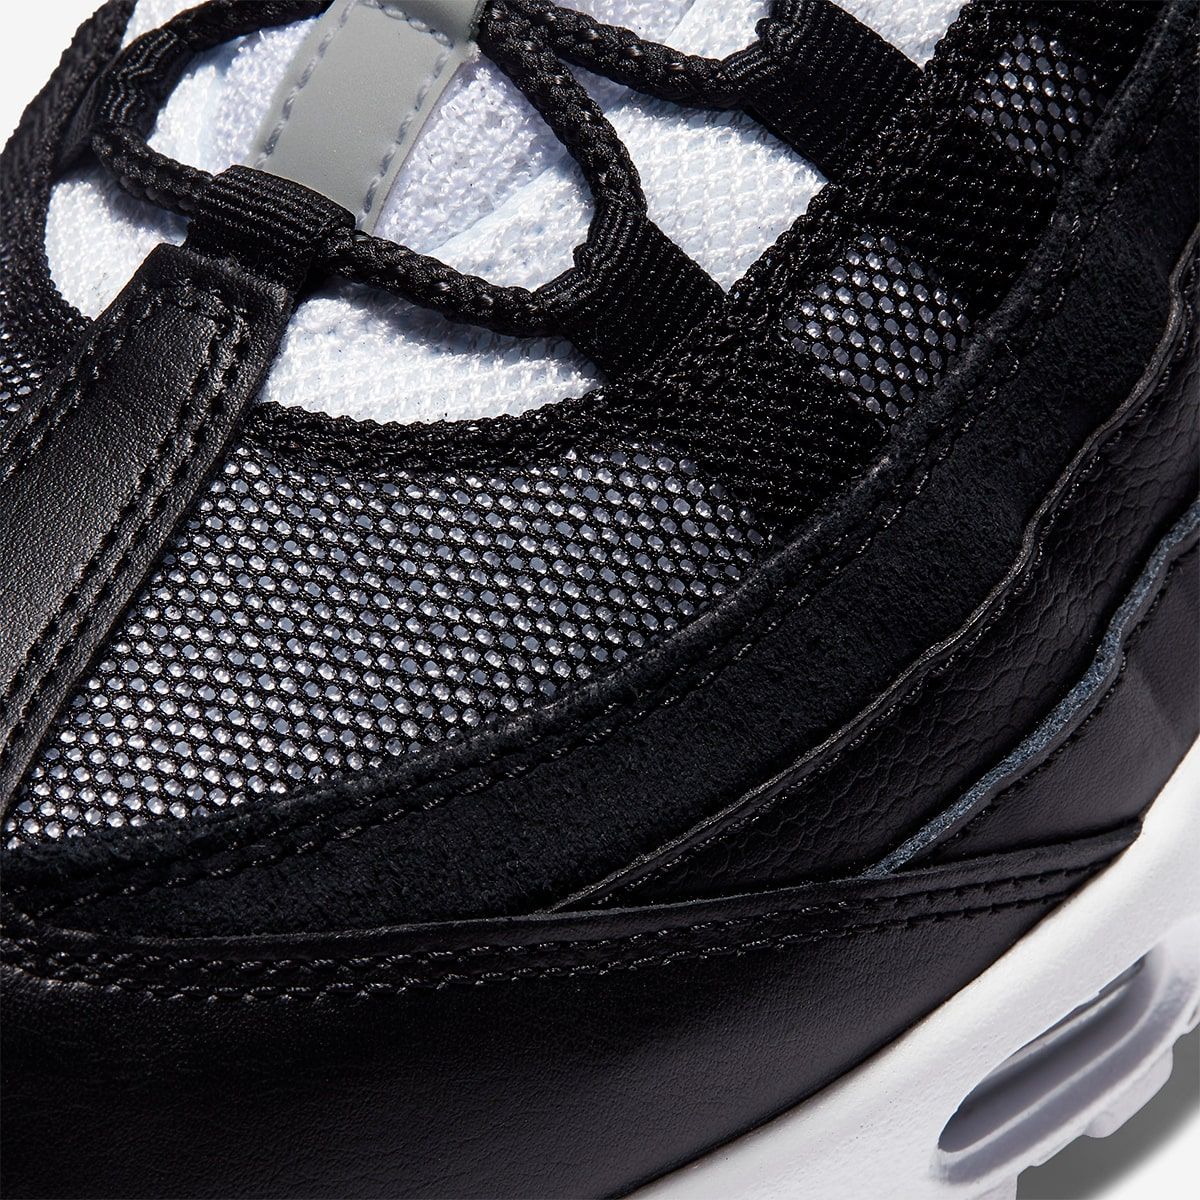 Nike Air Max 95 Black Reflect Silver (Women's)